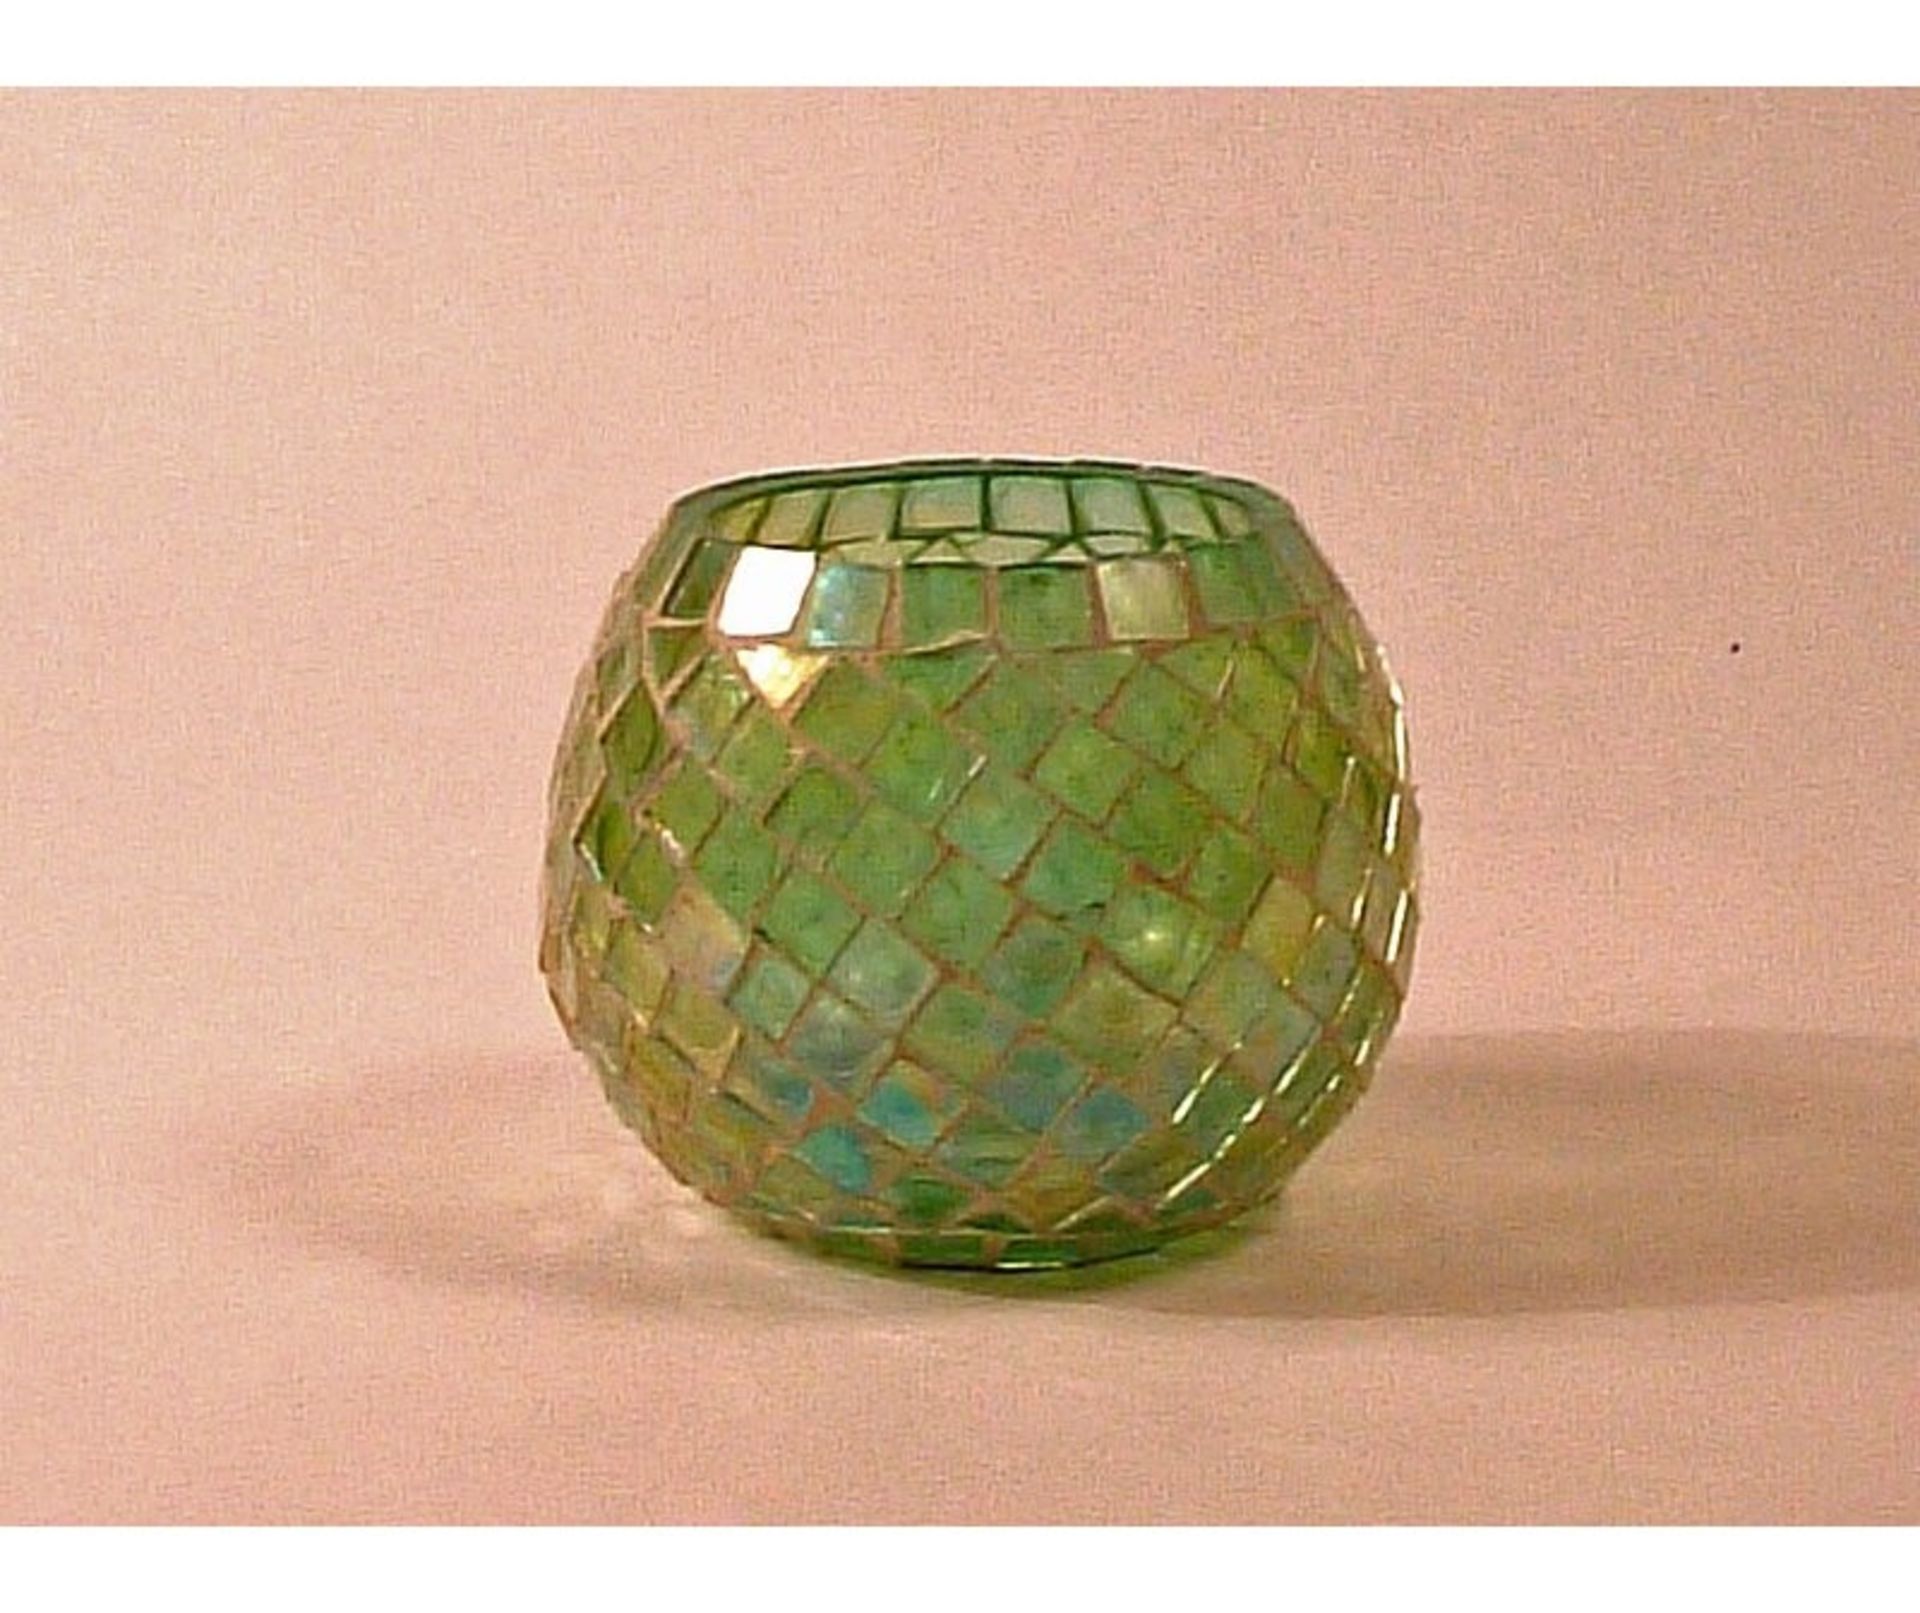 Schuller,Tulipas 10cm Glass Sphere Lamp Shade RRP - £22.54 (17474/18 -QFA1885)(GREEN) 4D